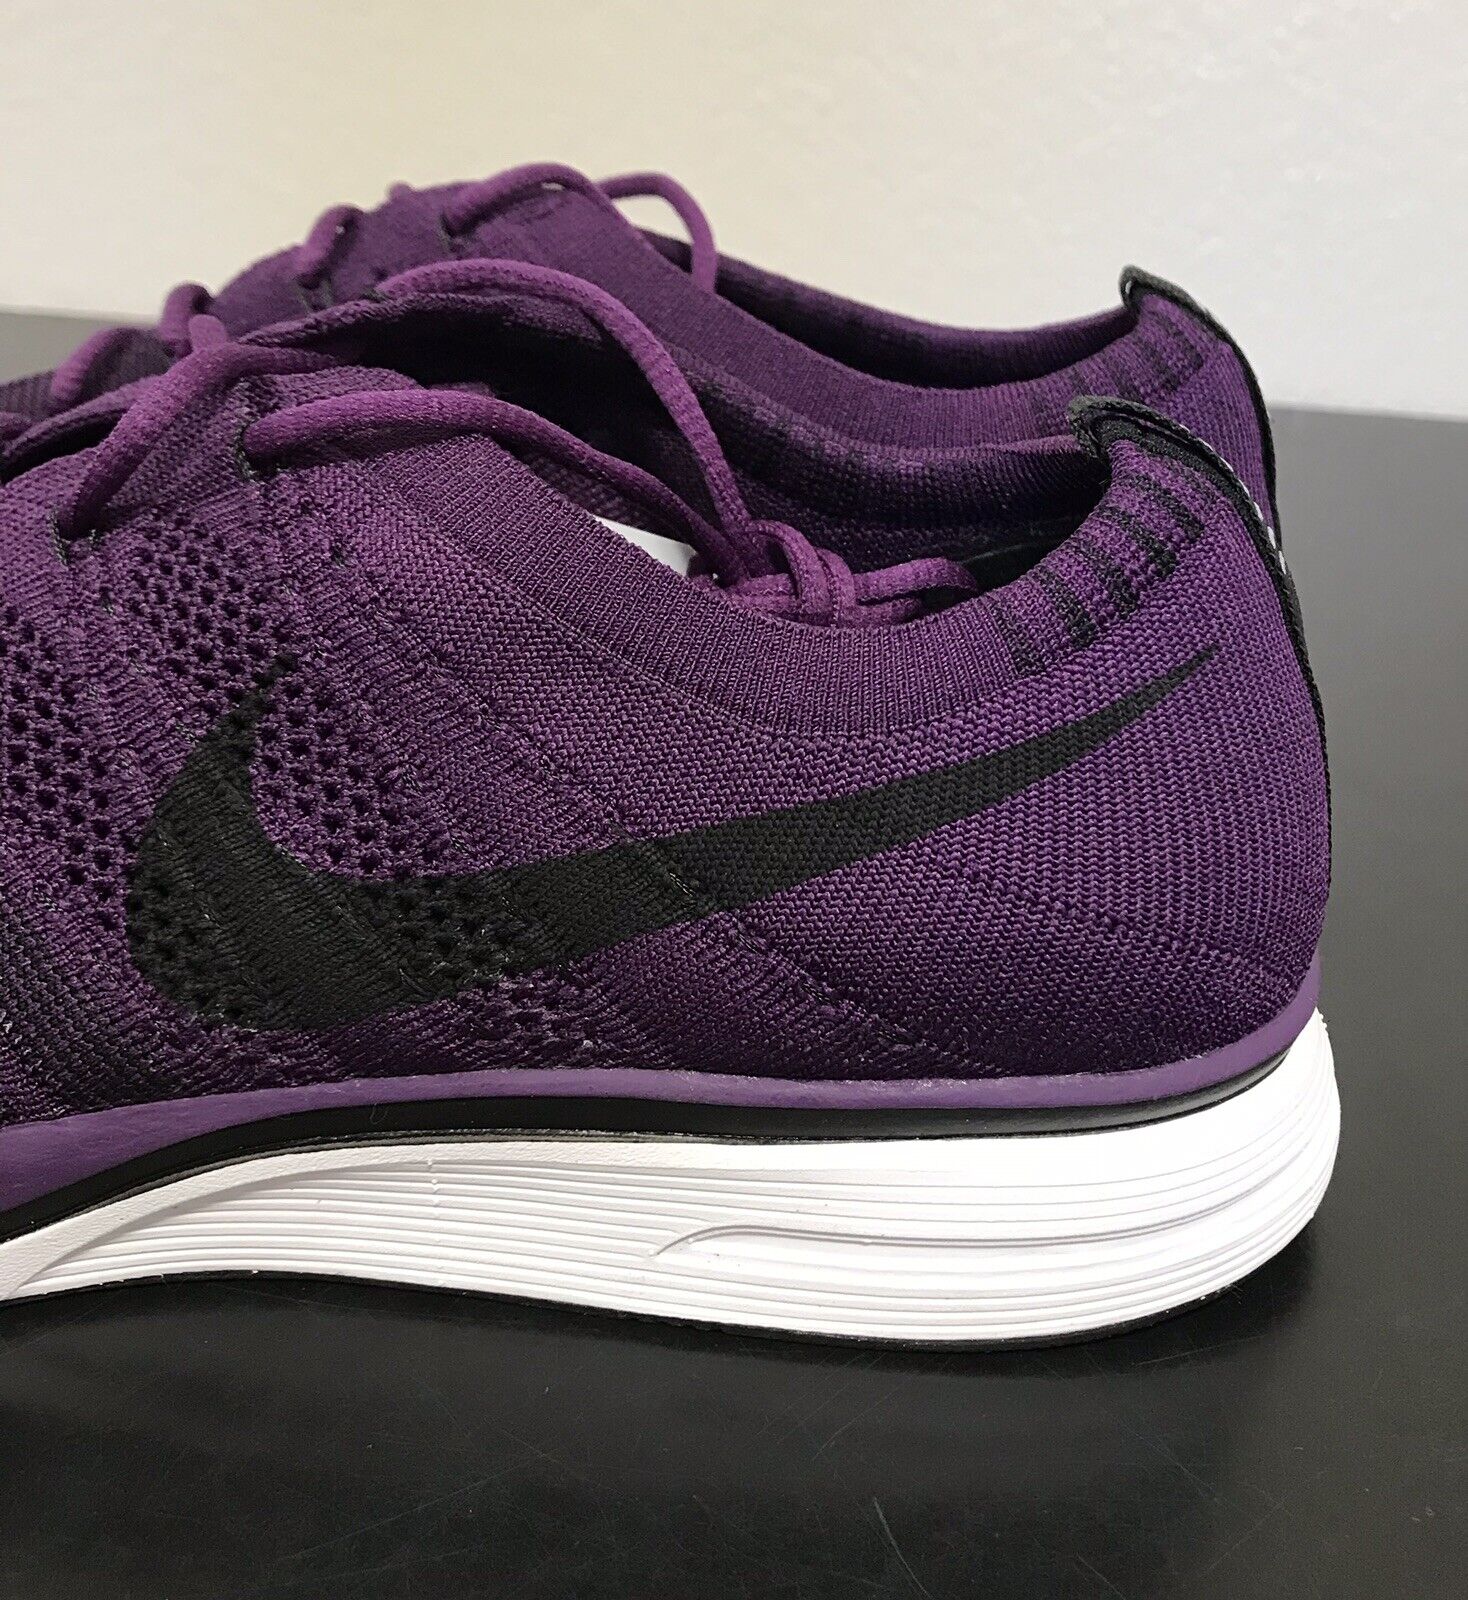 Voorwaardelijk Intentie Mainstream Nike Flyknit Trainer Night Purple Black White Mens Sz 10.5 Running Shoes  Racer | eBay